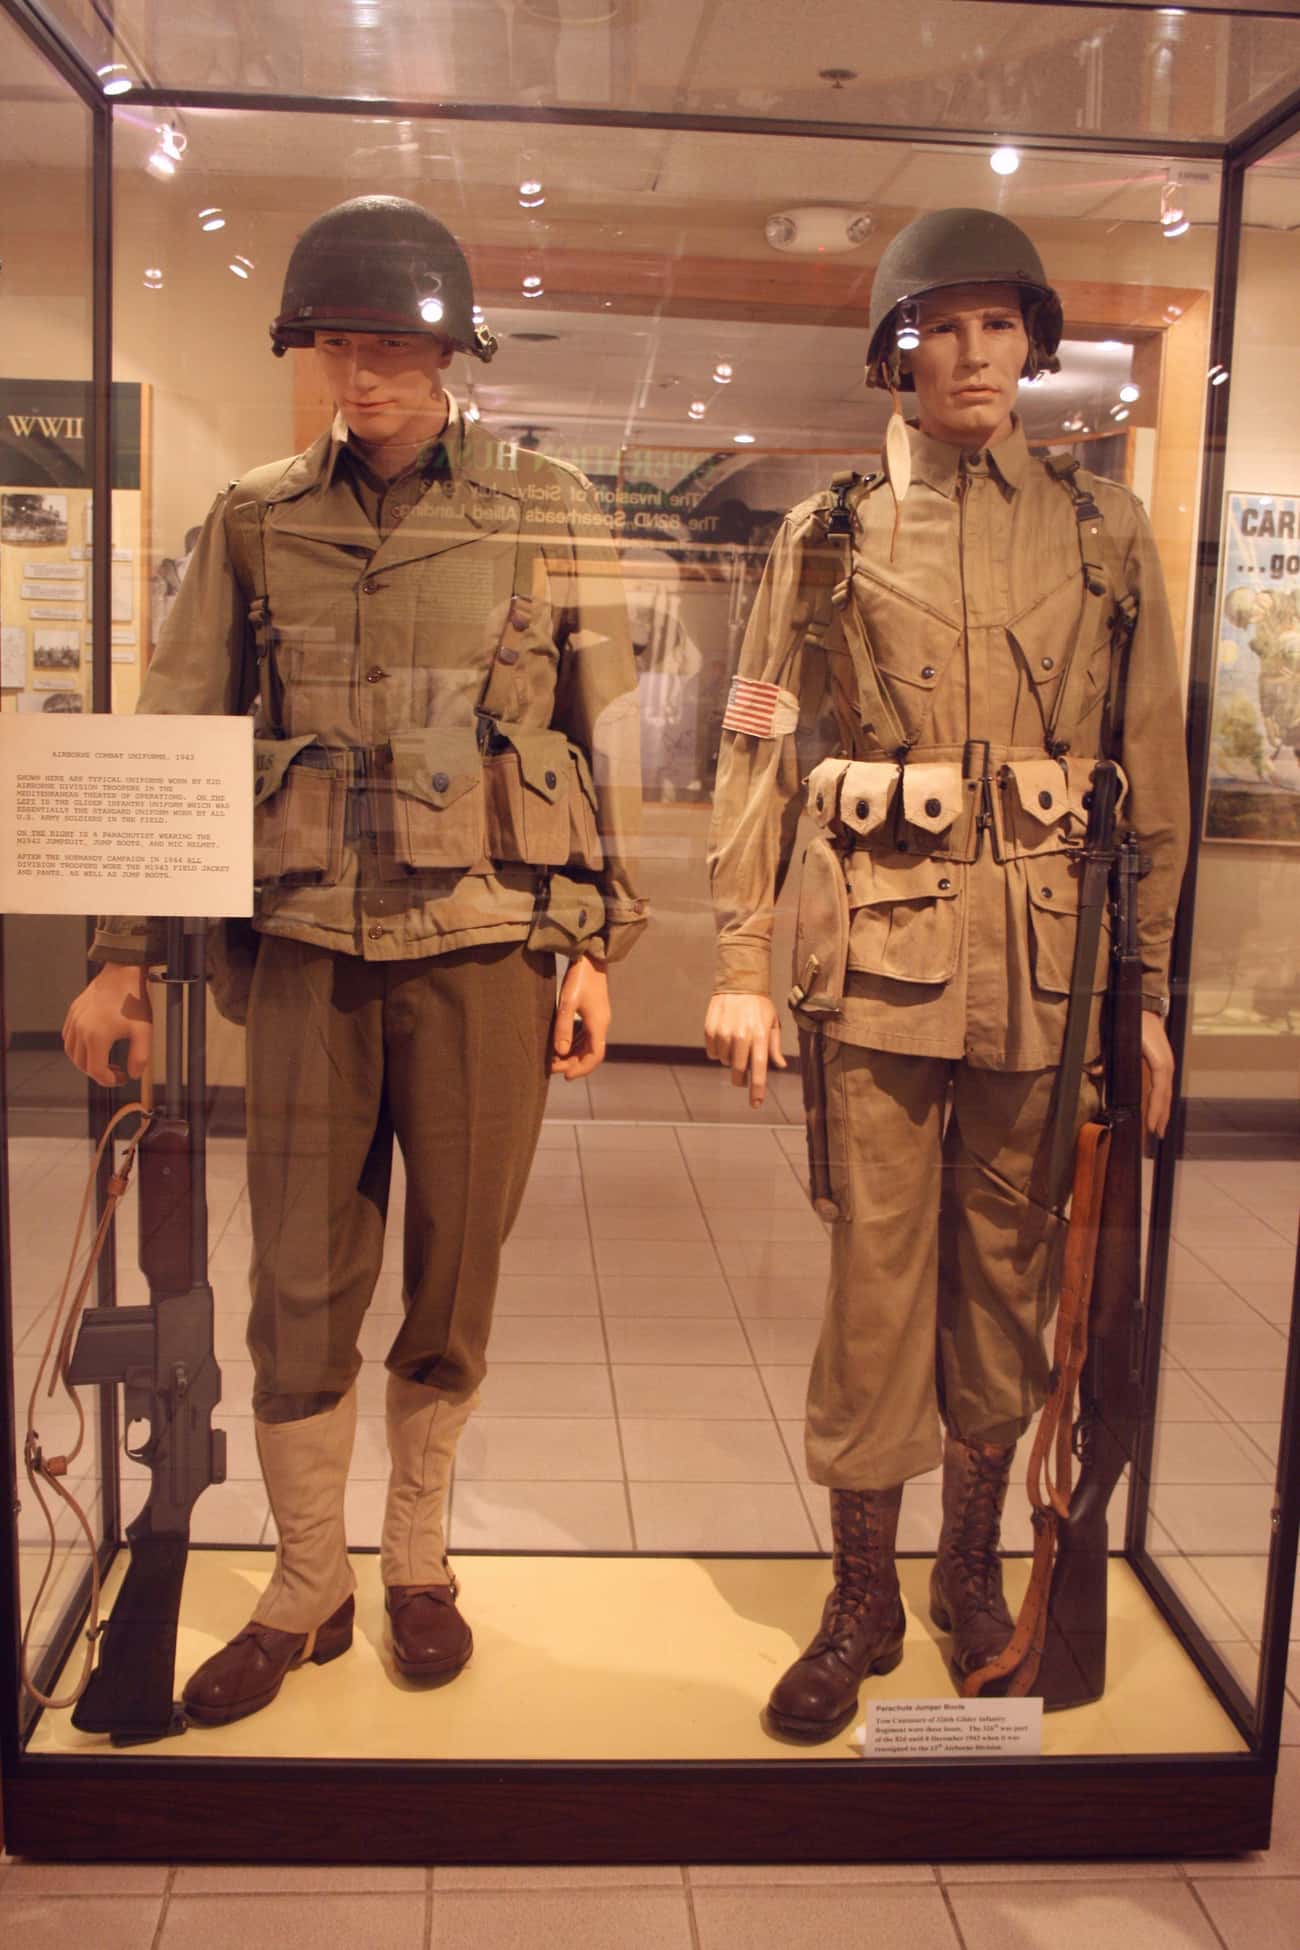 The 1943 Universal Uniform